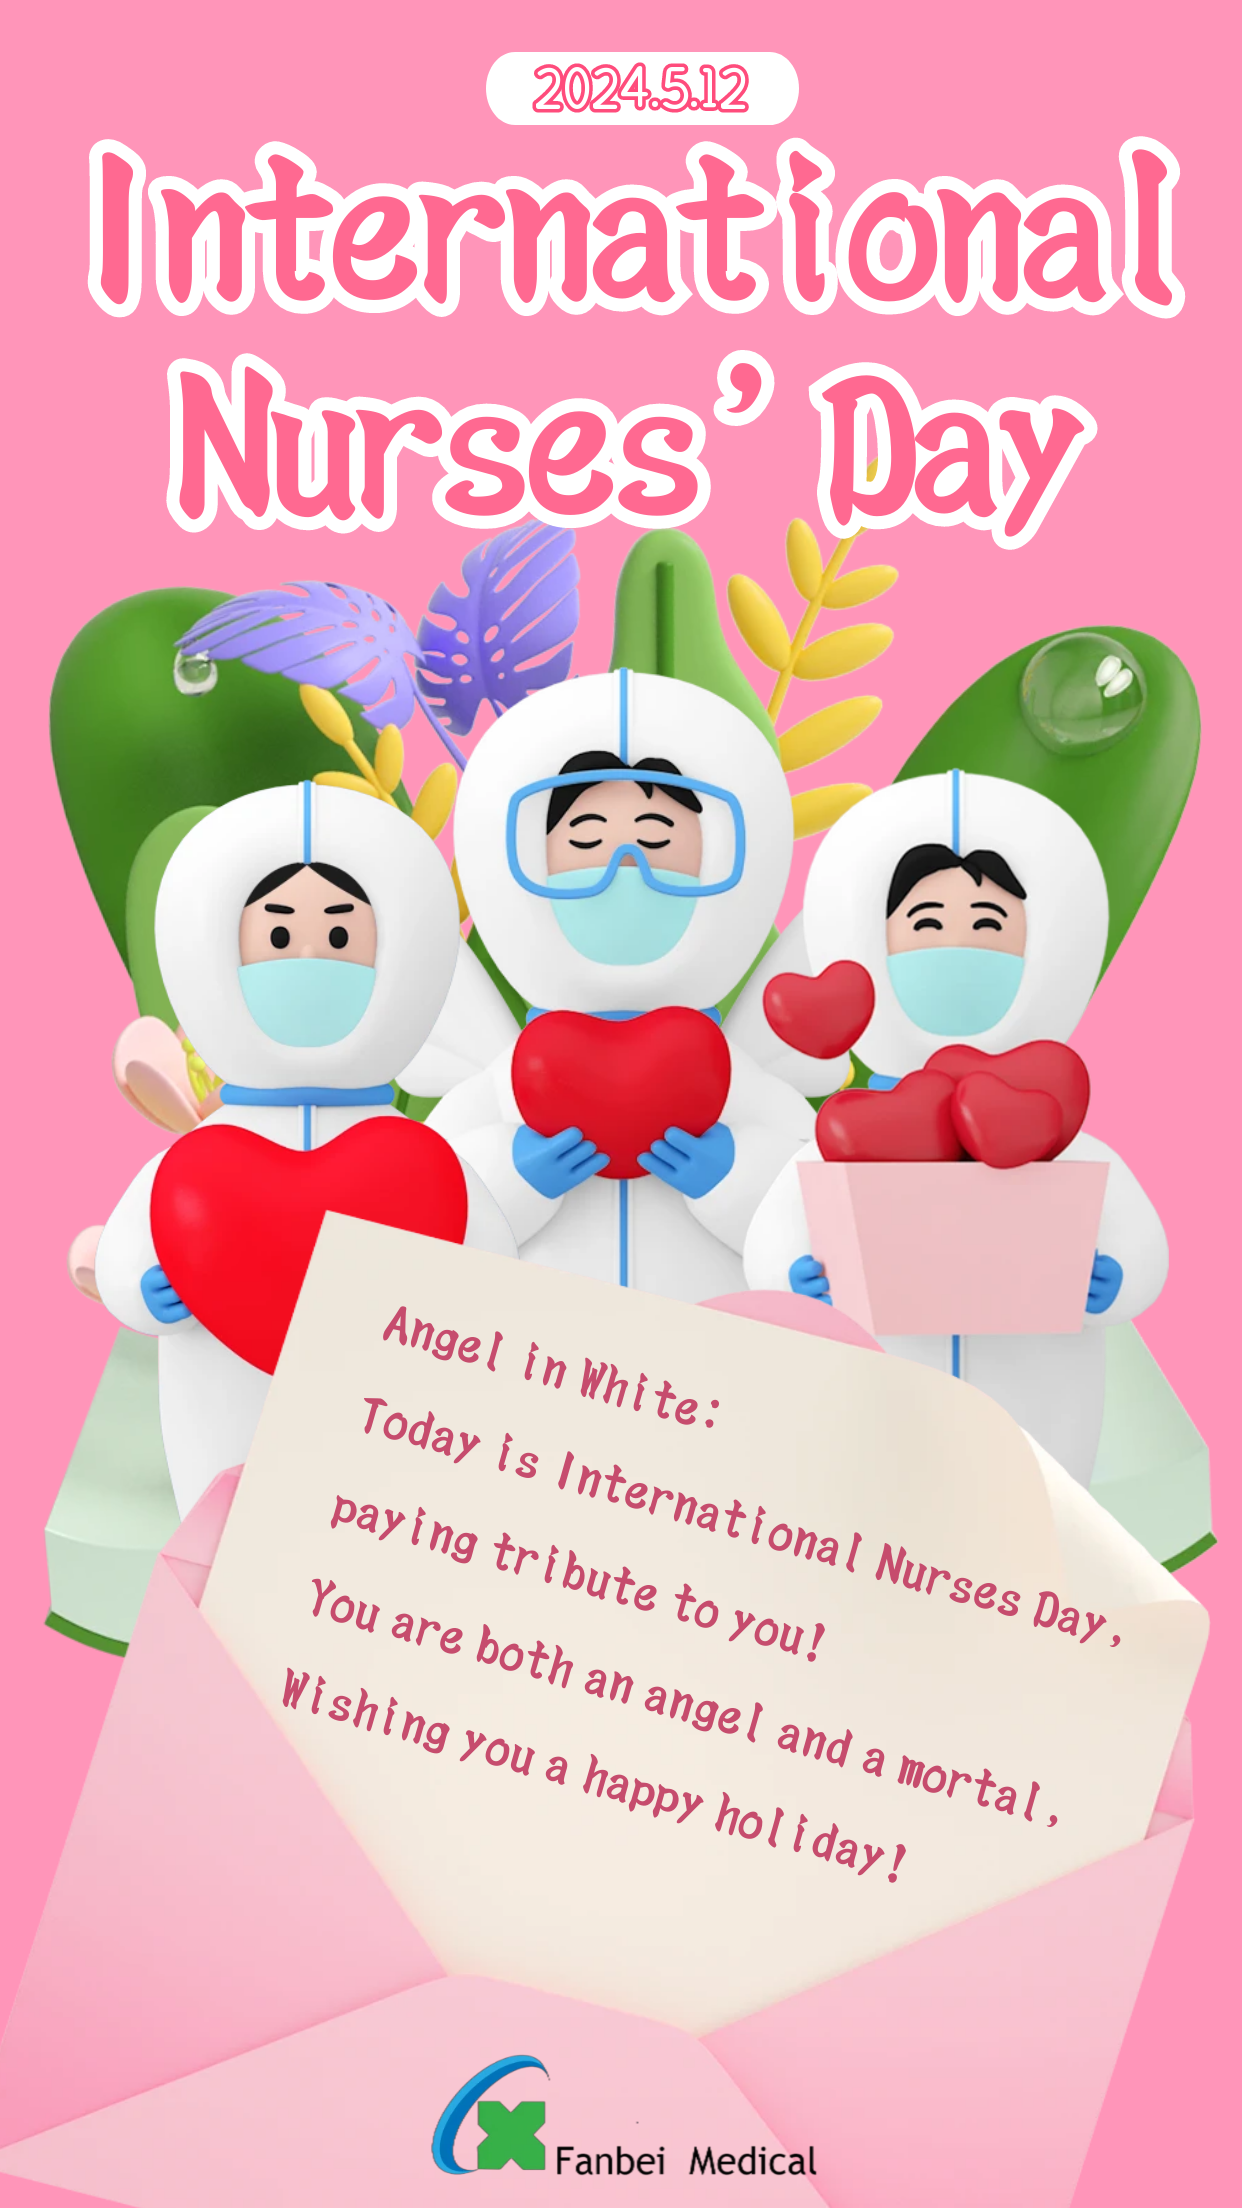 Celebration of the 113th International Nurses Day:Our nurses Our futures